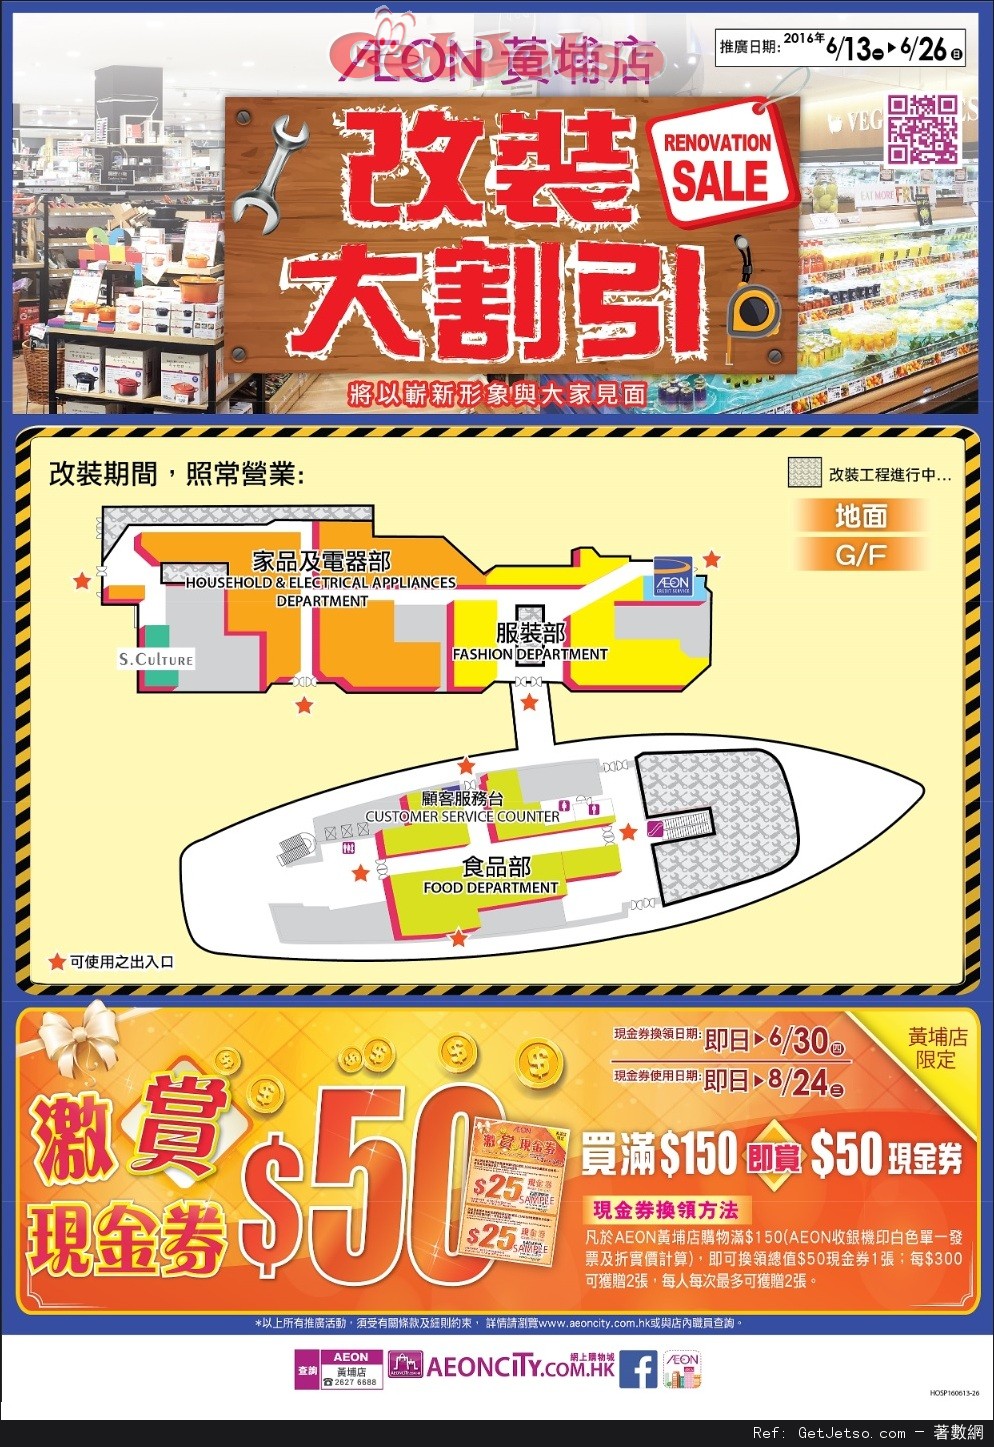 AEON 黃埔店改裝大割引購物優惠(至16年6月26日)圖片1